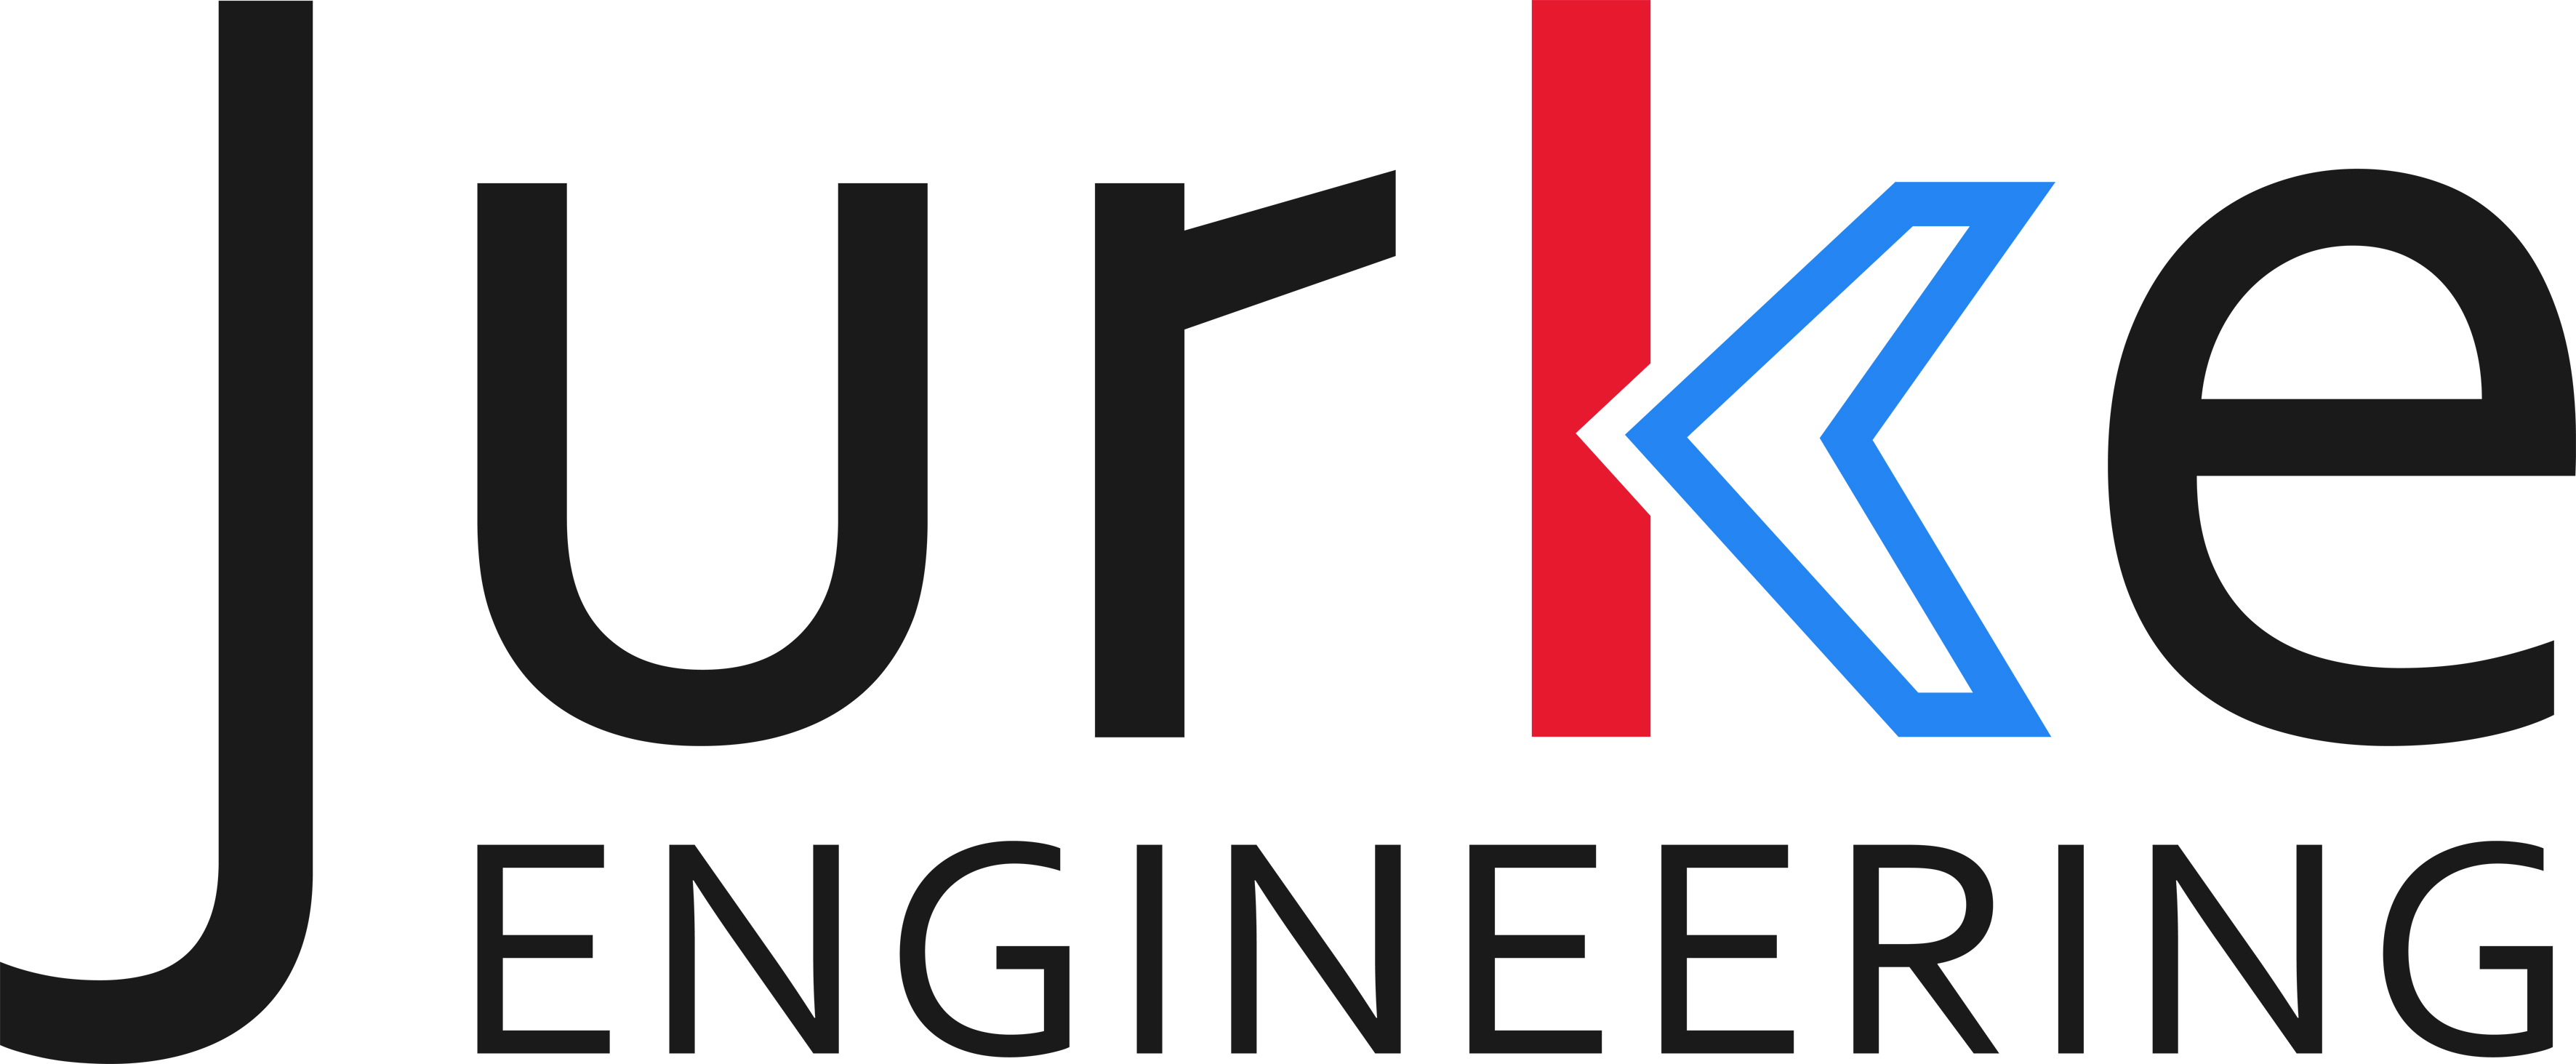 jurke-engineering